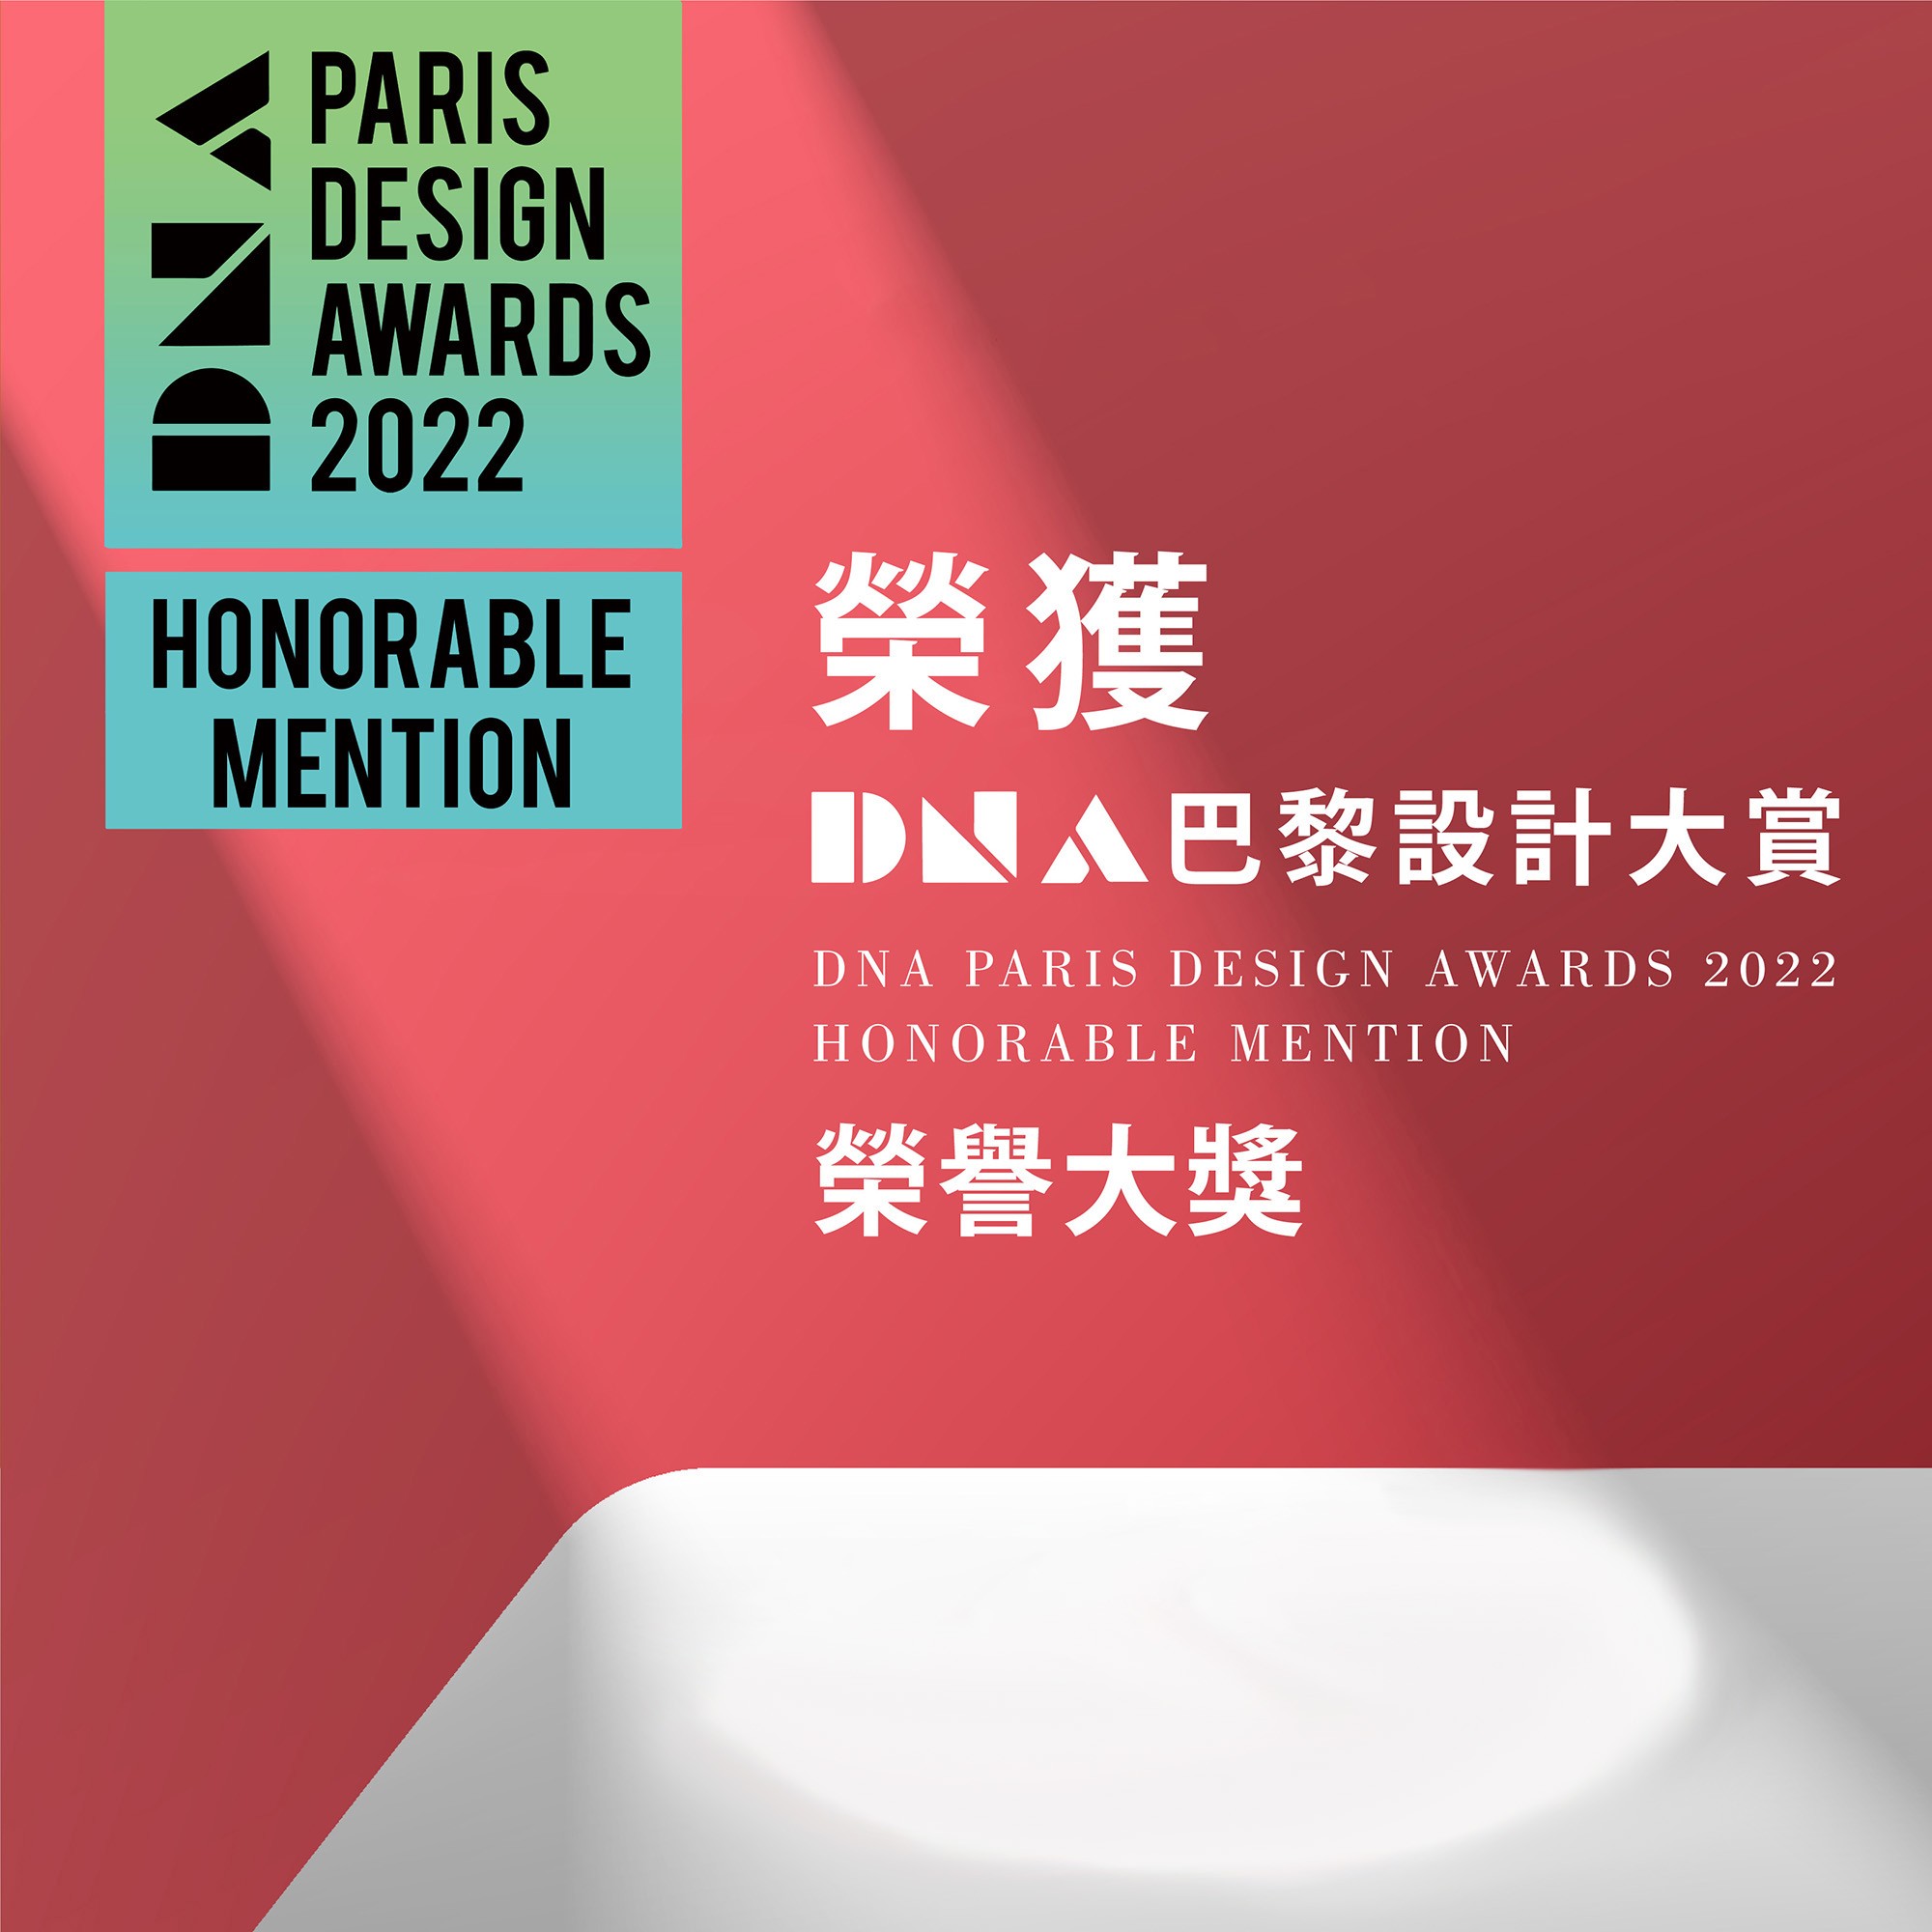 賀！！會理化工設計團隊勇奪巴黎DNA設計大賞《HONORABLE MENTION》榮譽大獎